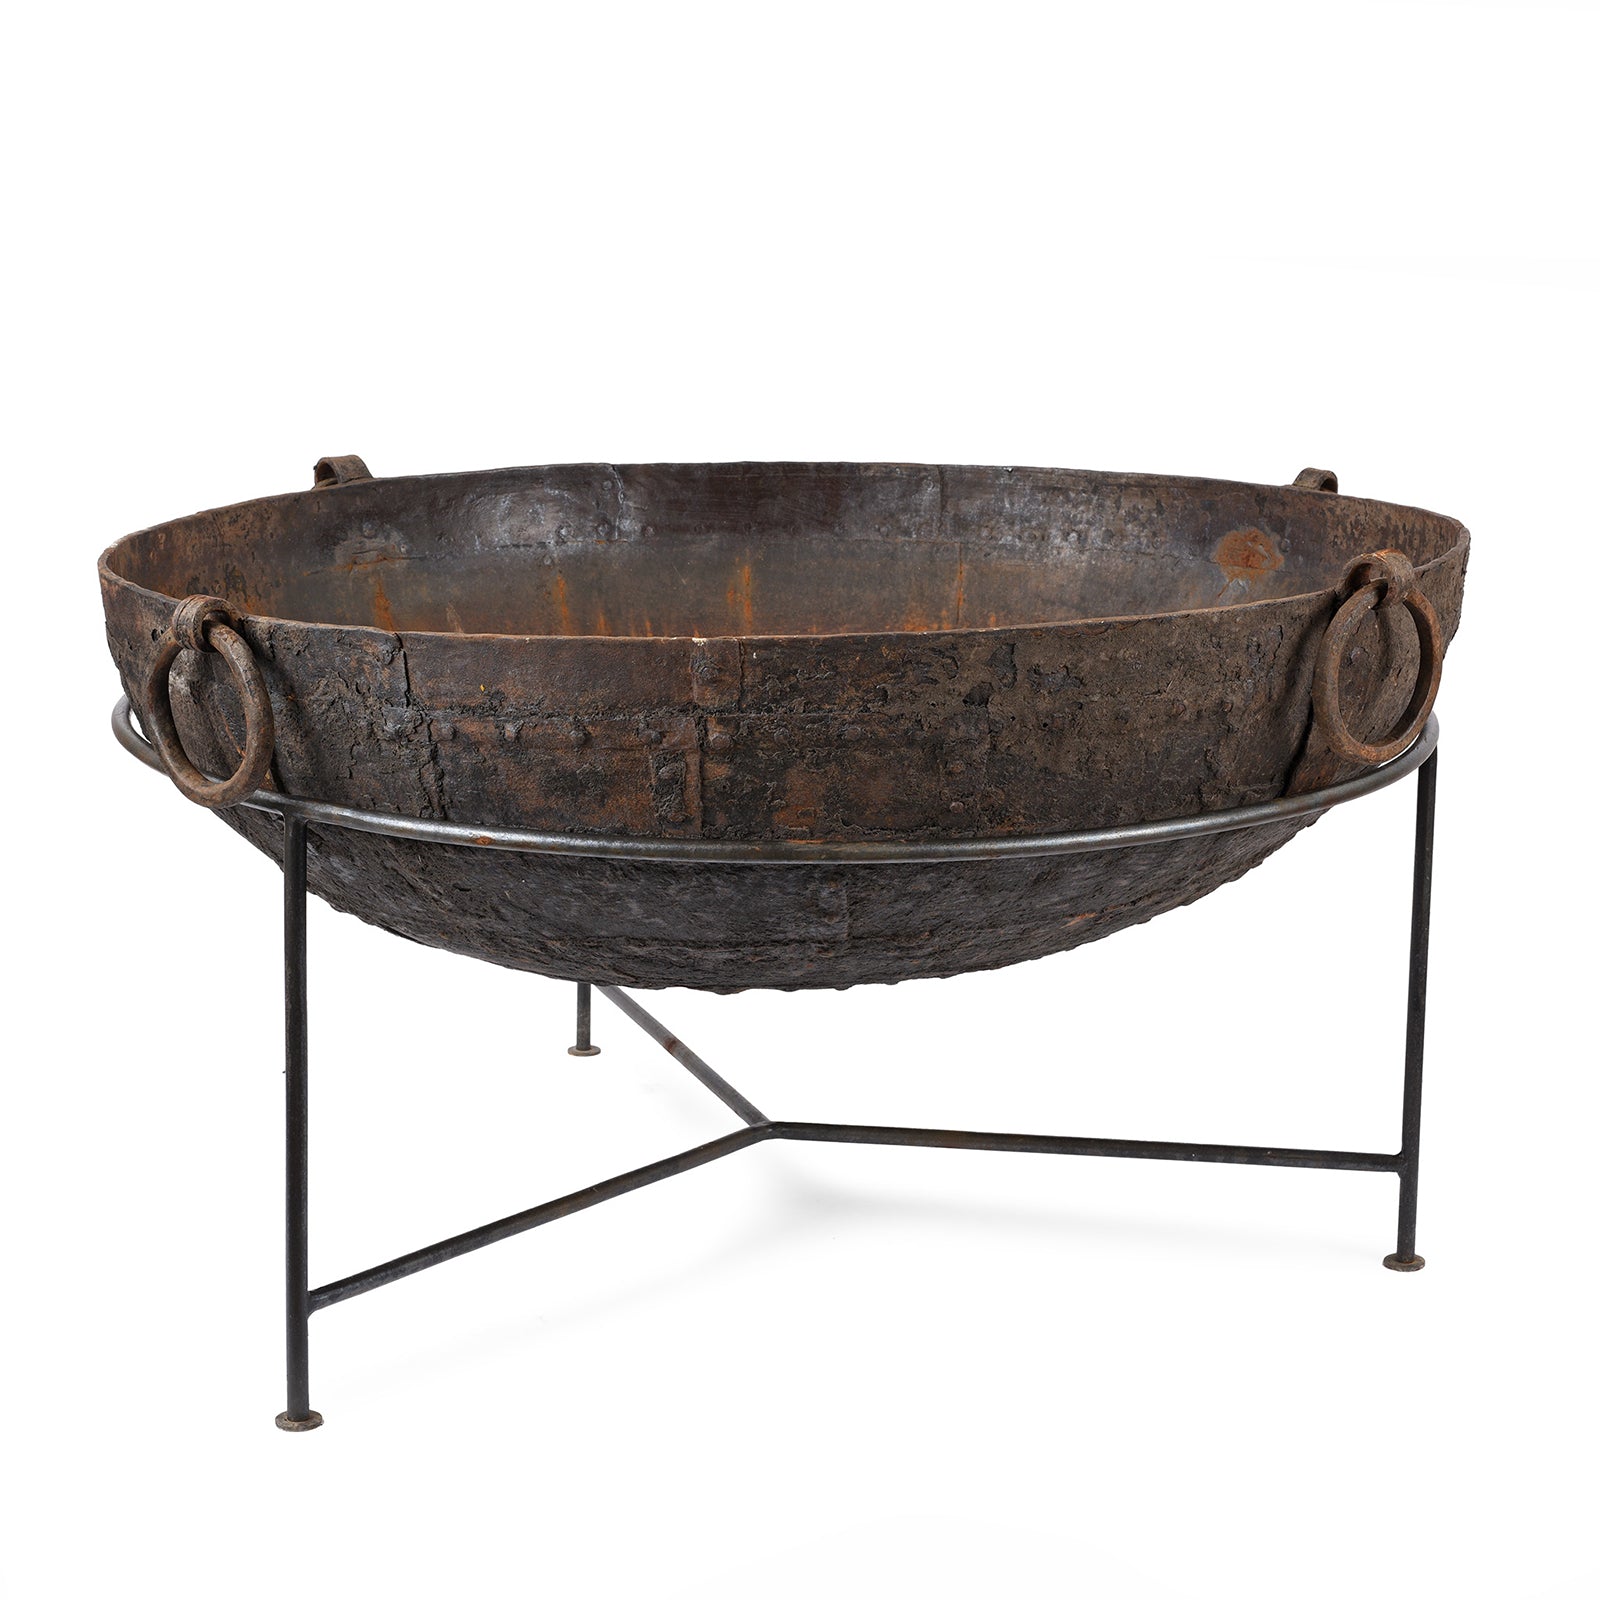 Old Indian Original Kadai Fire Bowl - 112cm diameter | Indigo Antiques